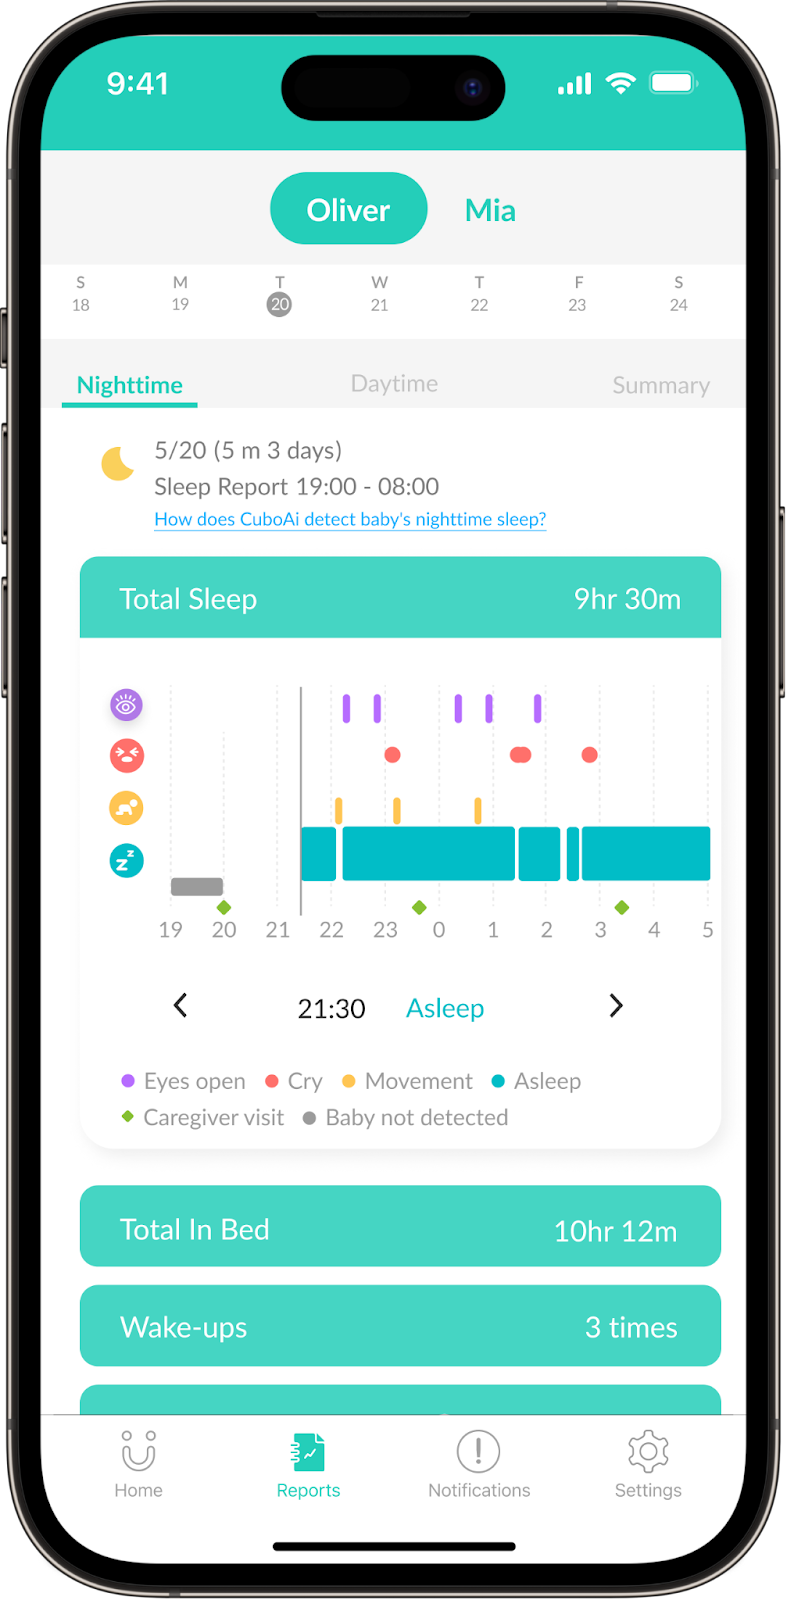 CuboAi Sleep Report: Monitoring Baby’s sleep status throughout the night